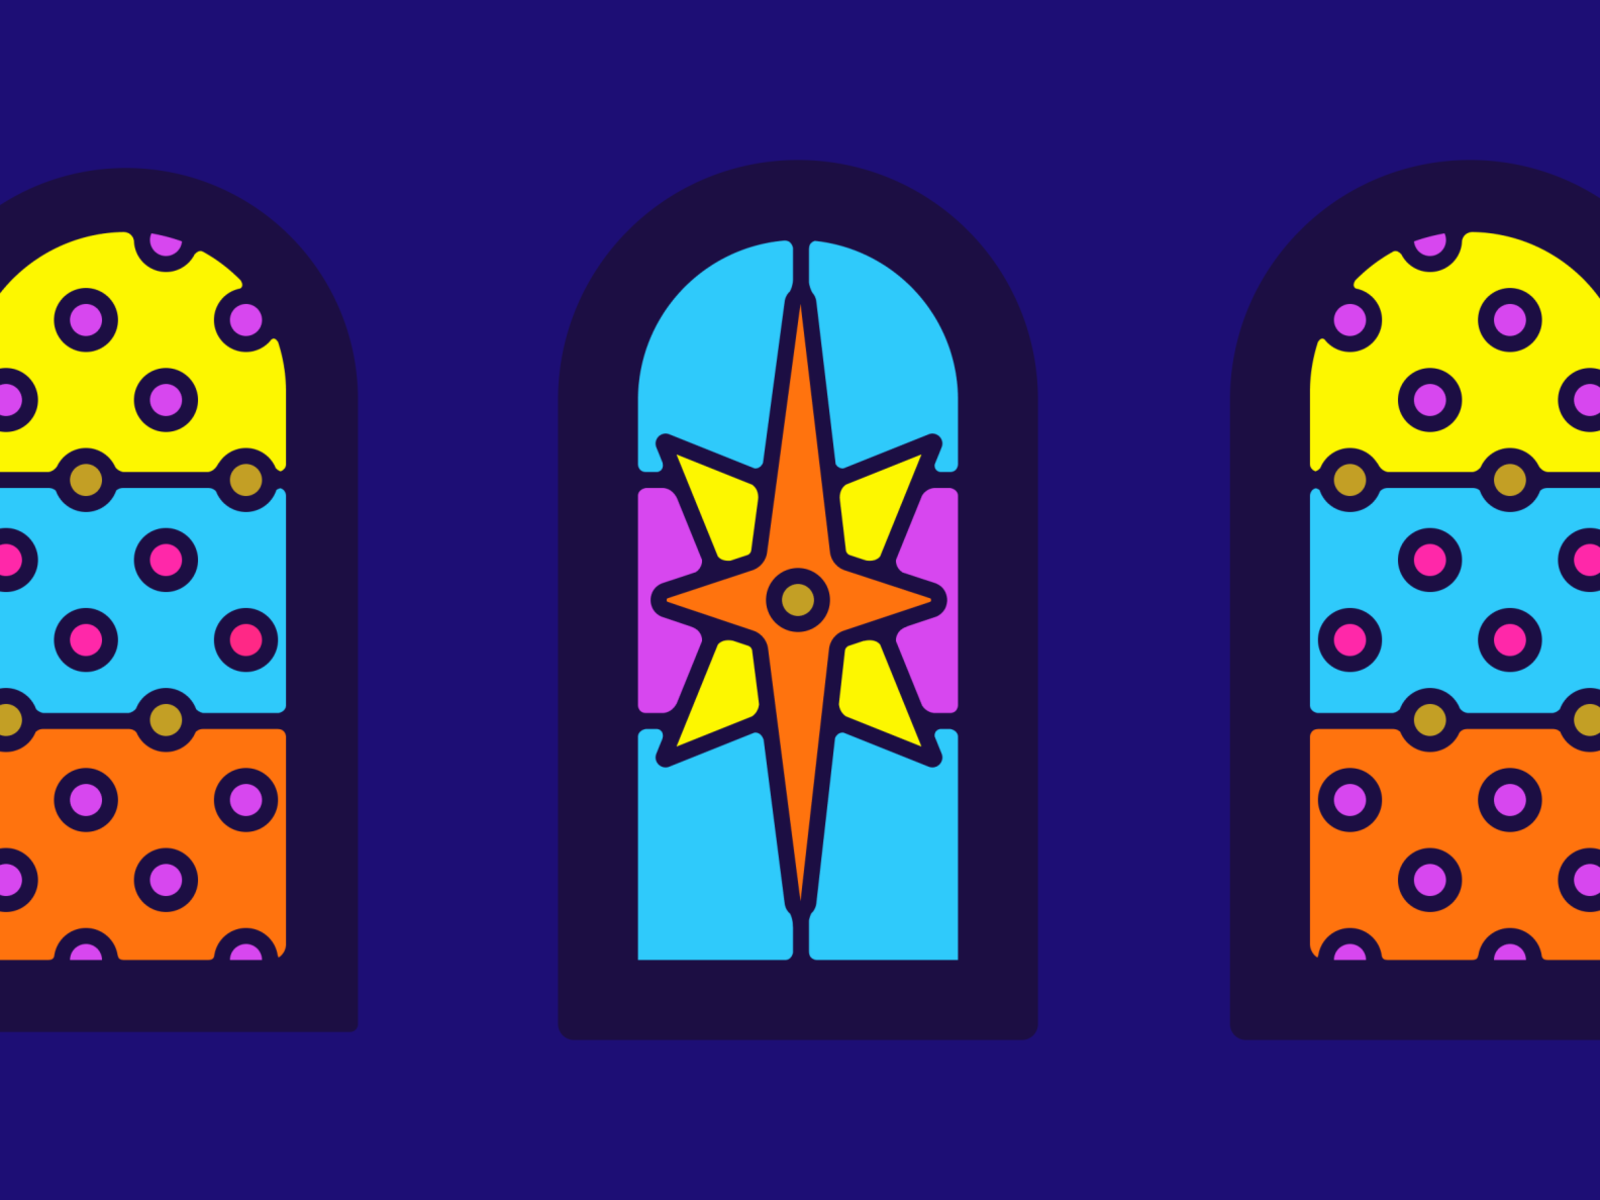 Windows blue colourful colours dots figma glass illustration star vector windows